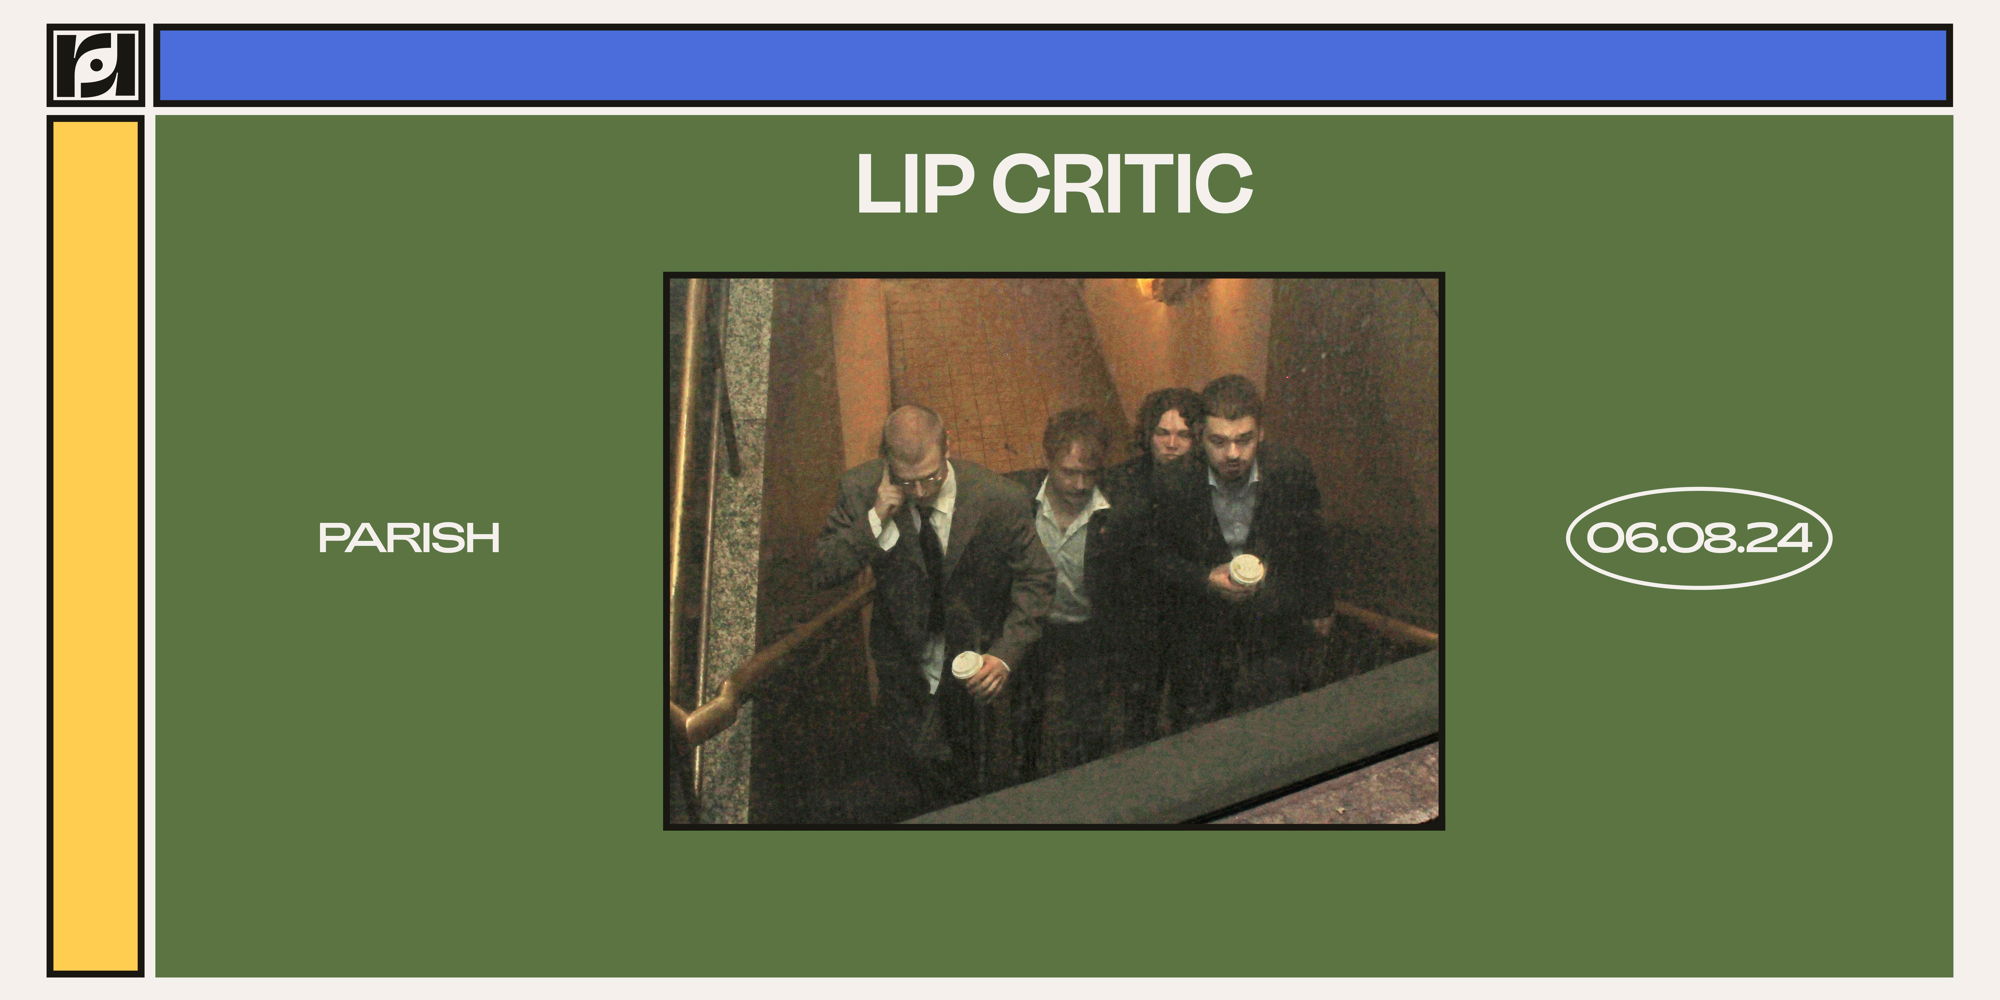 Resound Presents: Lip Critic at Parish promotional image